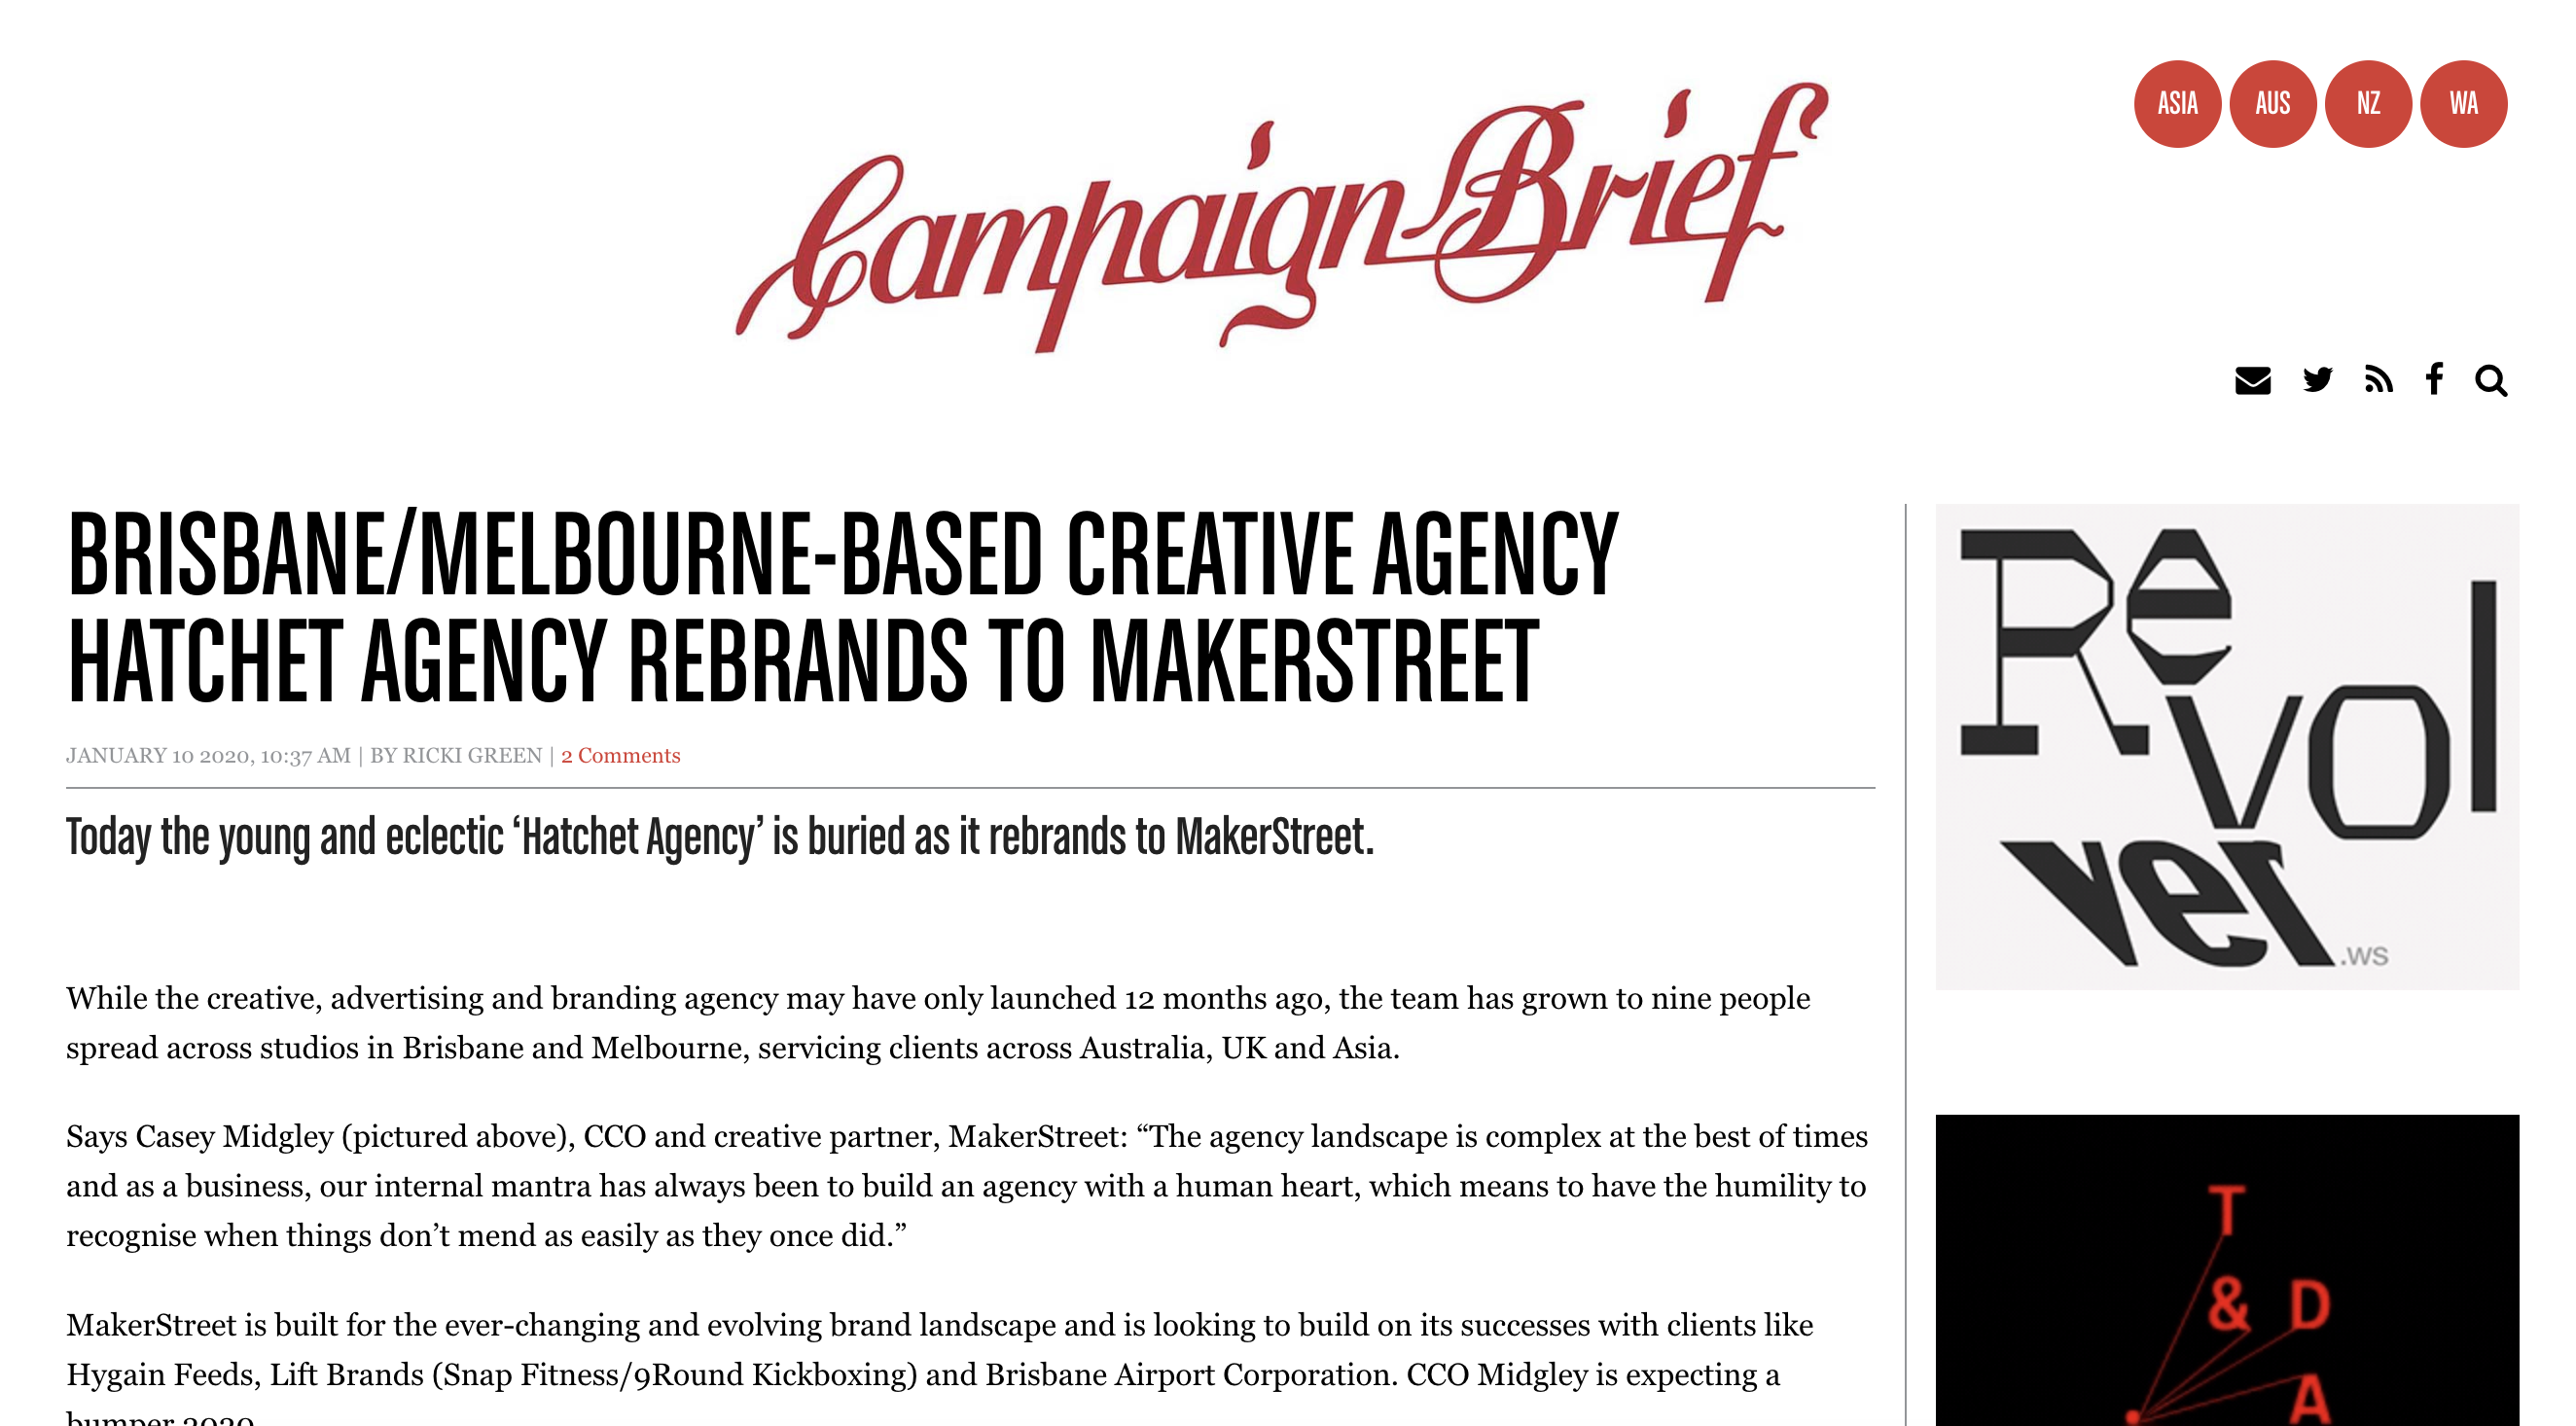 Hatchet Agency rebrands to Maker Street Press Release via Campaign Brief